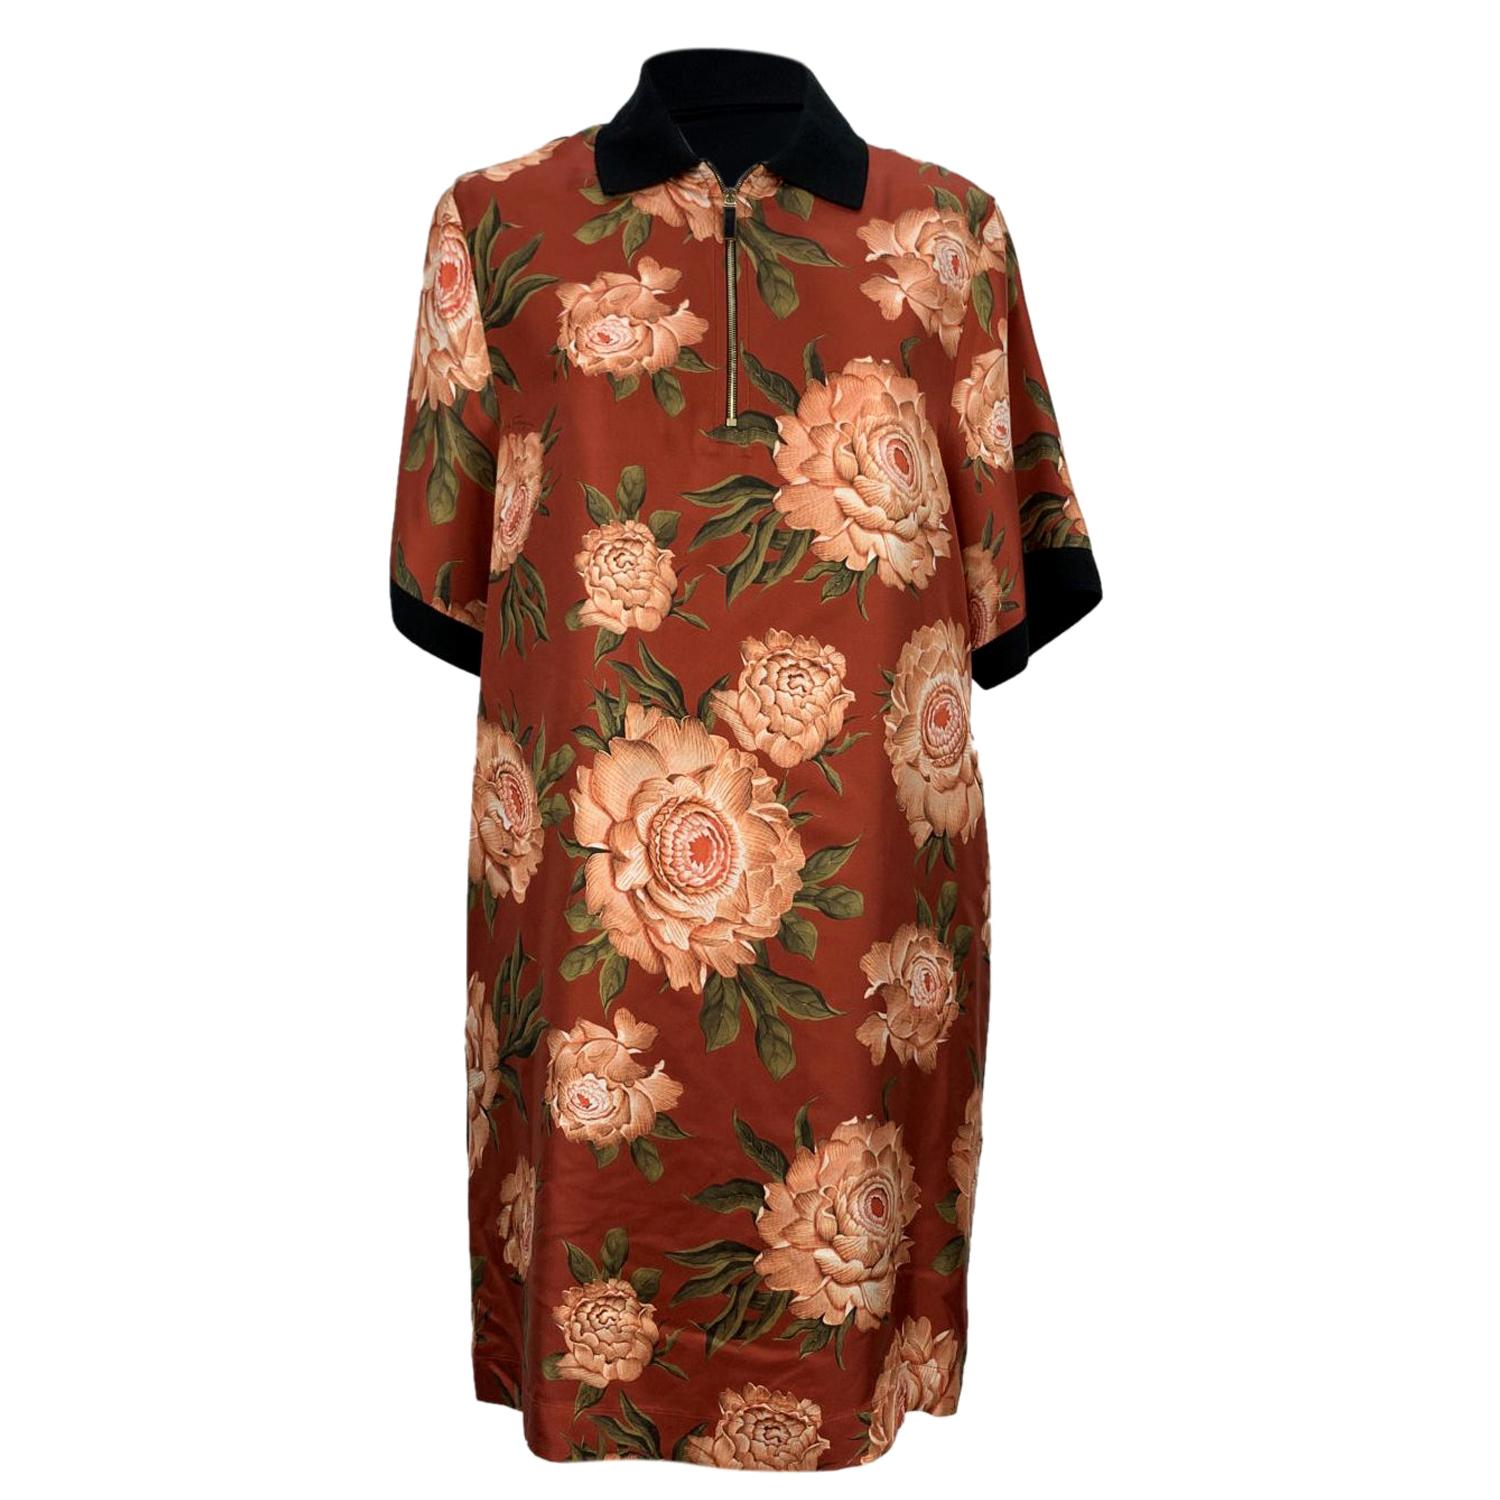 Salvatore Ferragamo Floral Silk and Cotton T-Shirt Dress Size 42 IT